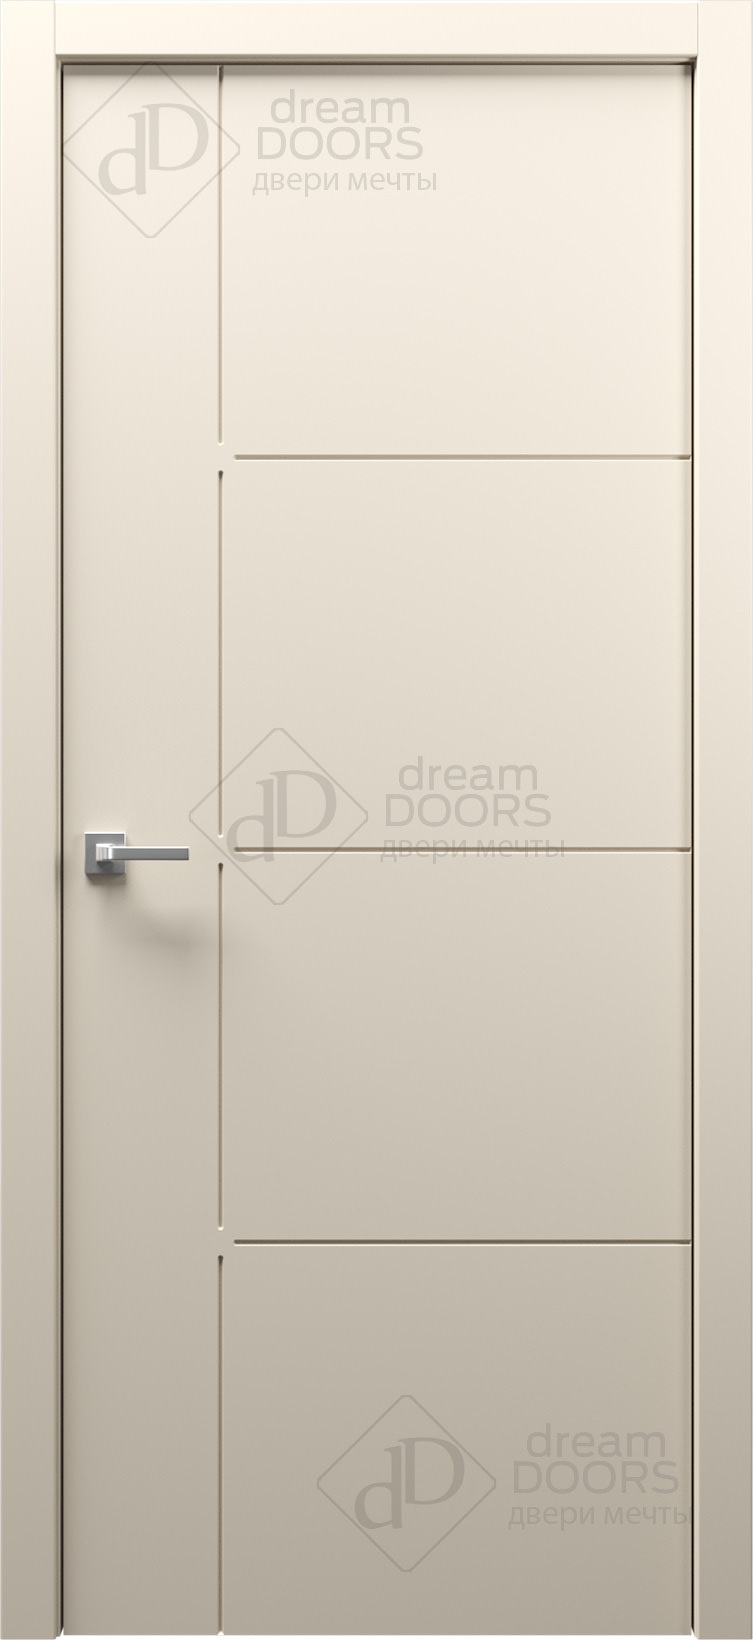 Dream Doors Межкомнатная дверь I27, арт. 6251 - фото №1